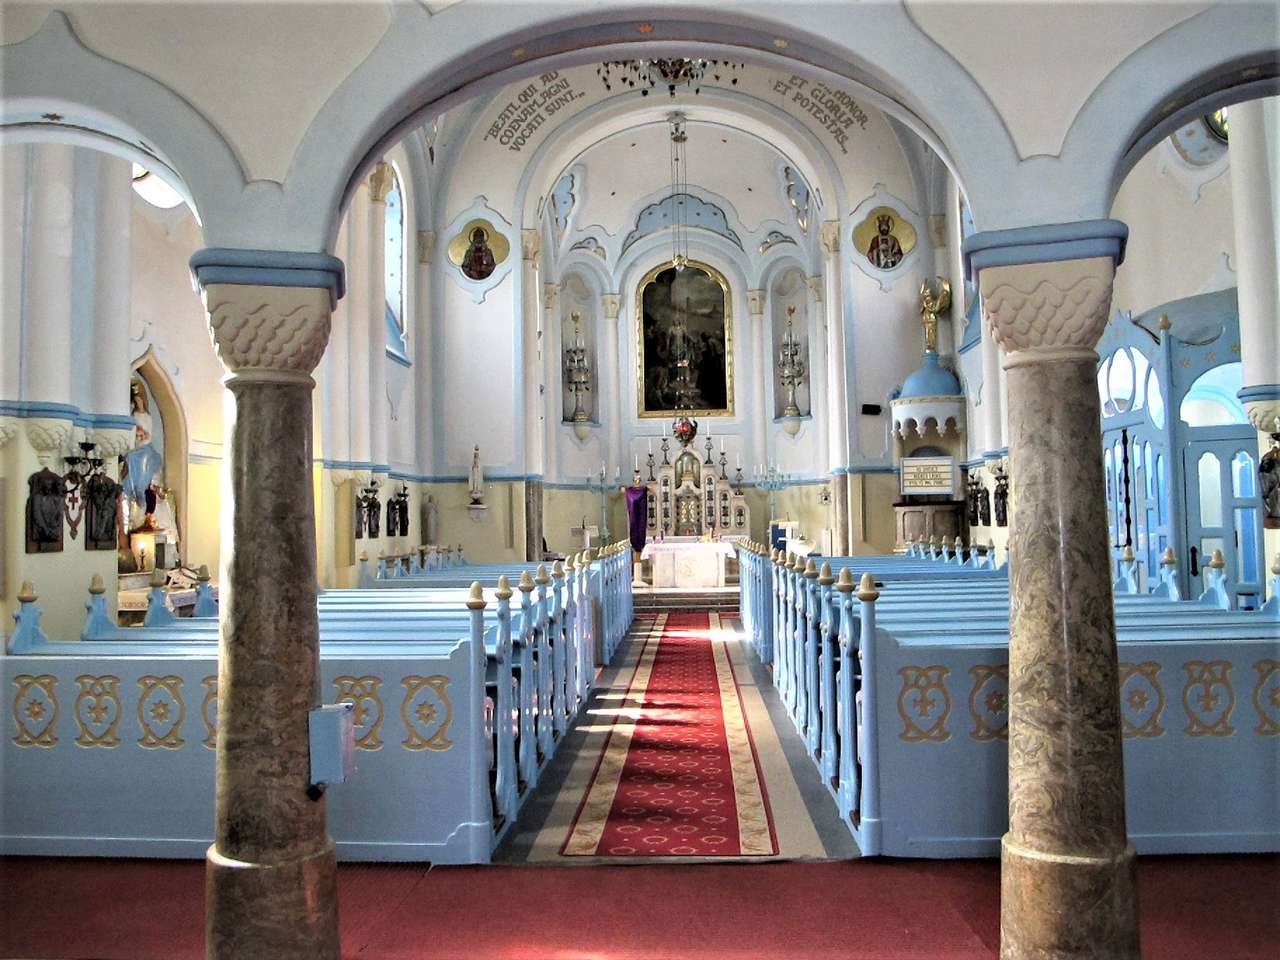 Bratislavský modrý kostel na Slovensku skládačky online